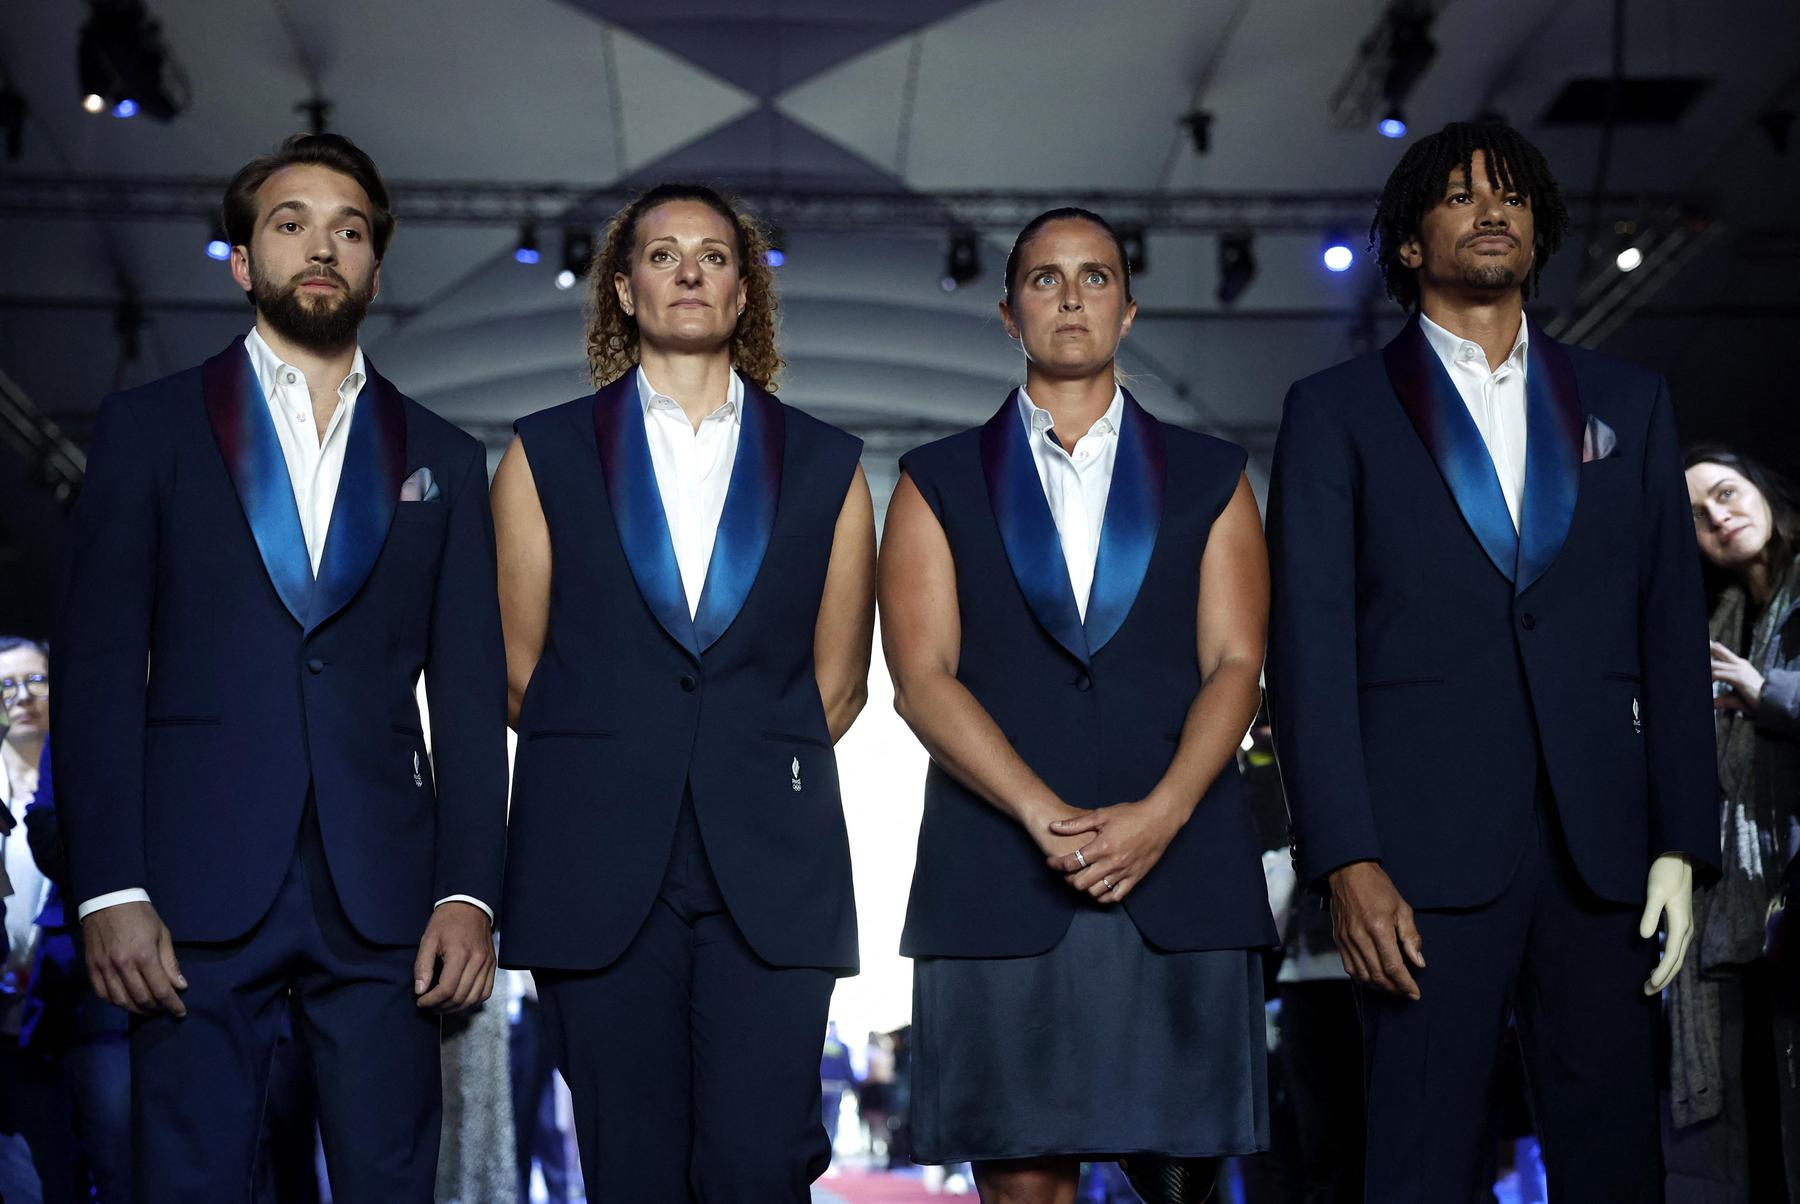 Berluti entwirft Outfits des franzsischen Teams fr Olympia-Erffnung